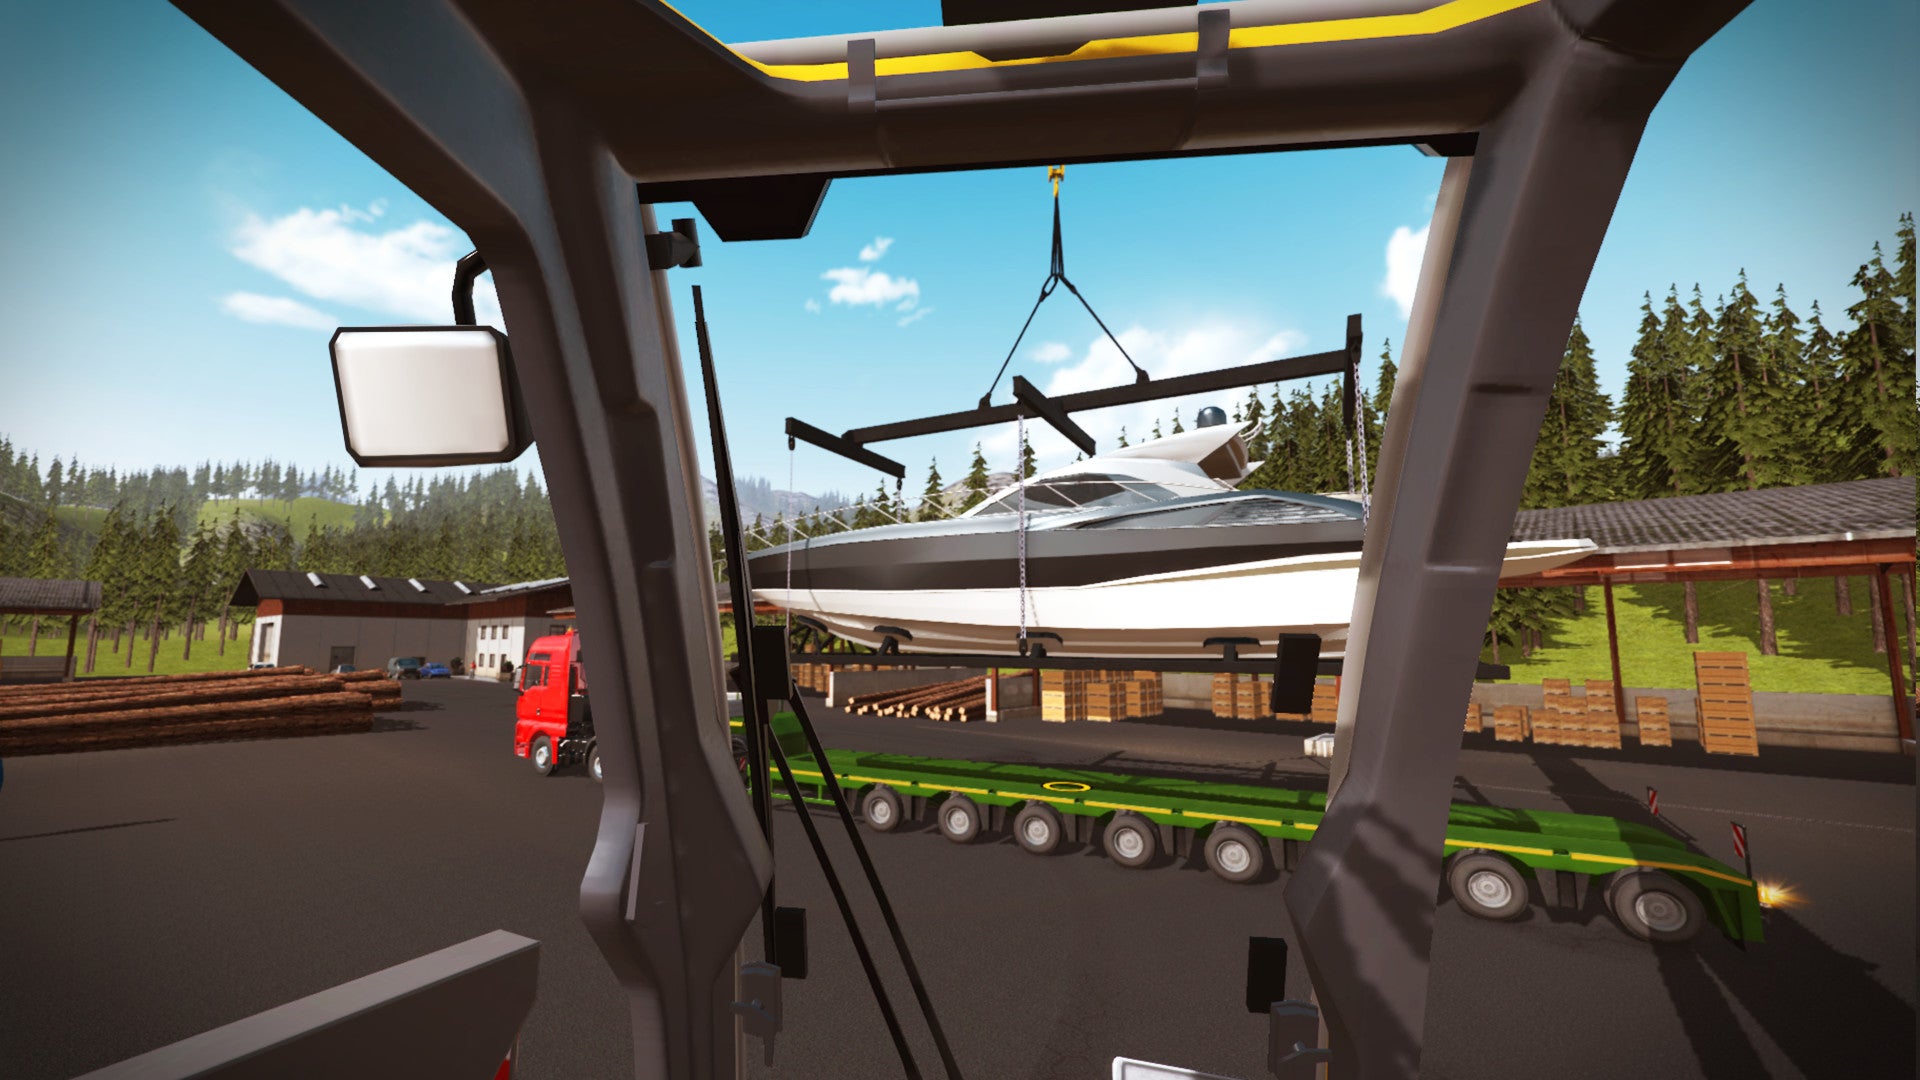 Construction Simulator 2015 - Liebherr LTM 1300 6.2 DLC